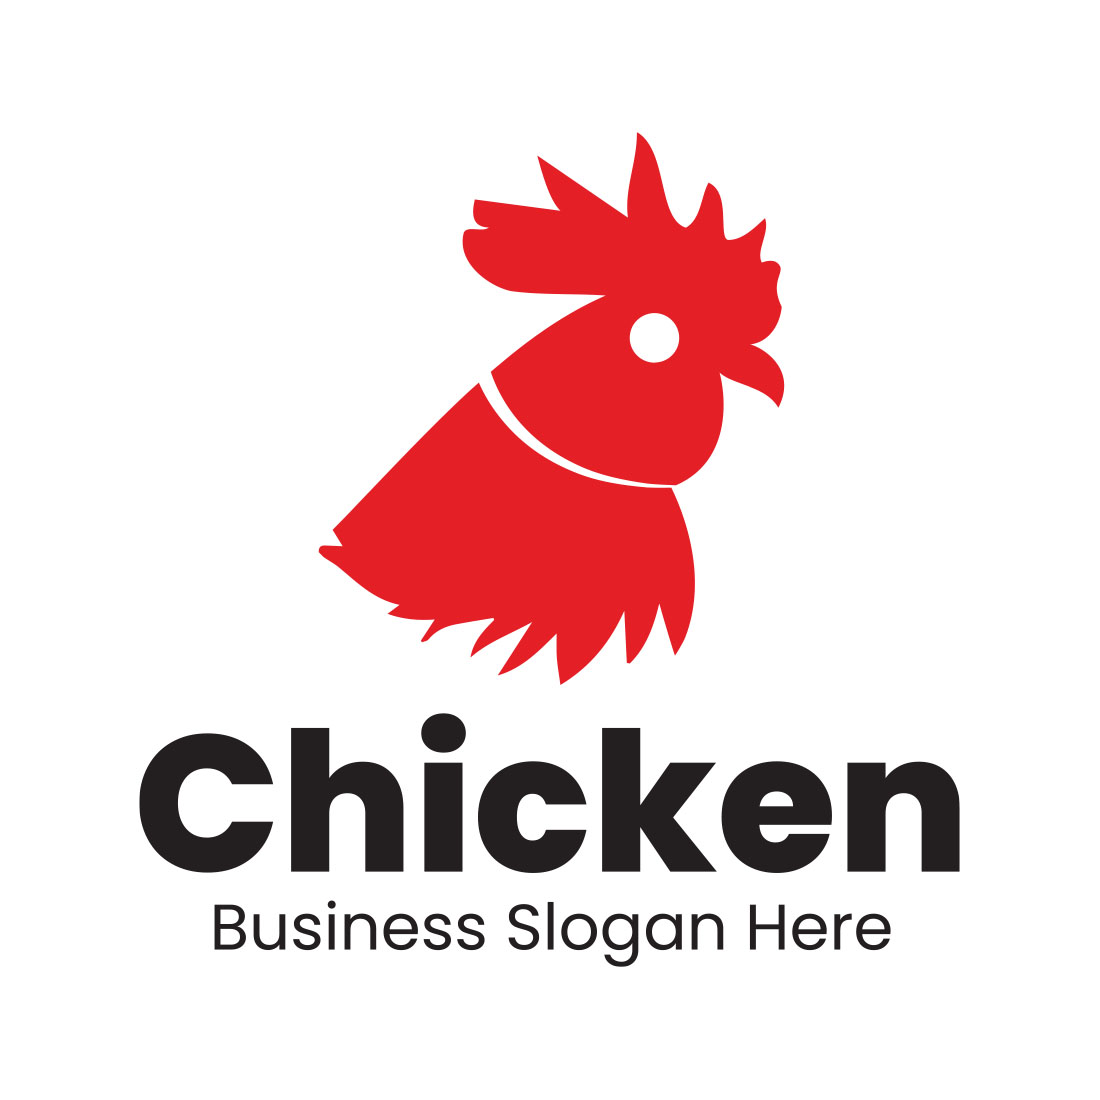 Simple Chicken Red Logo Design Tempate cover image.